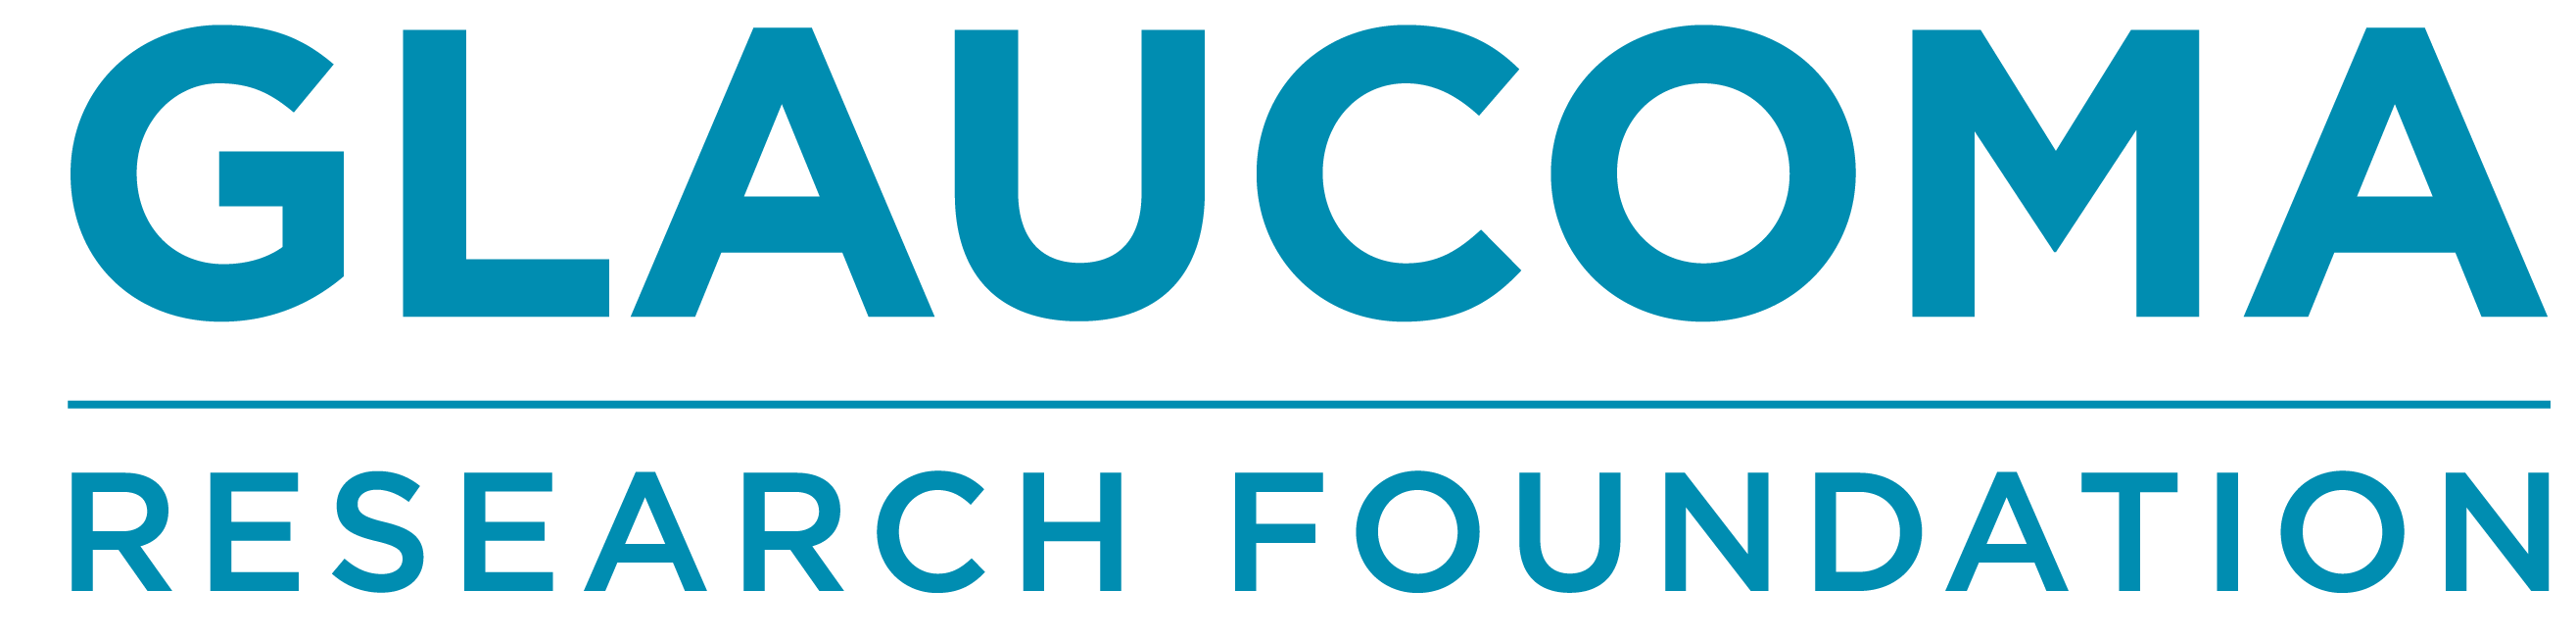 Glaucoma Research Foundation logo